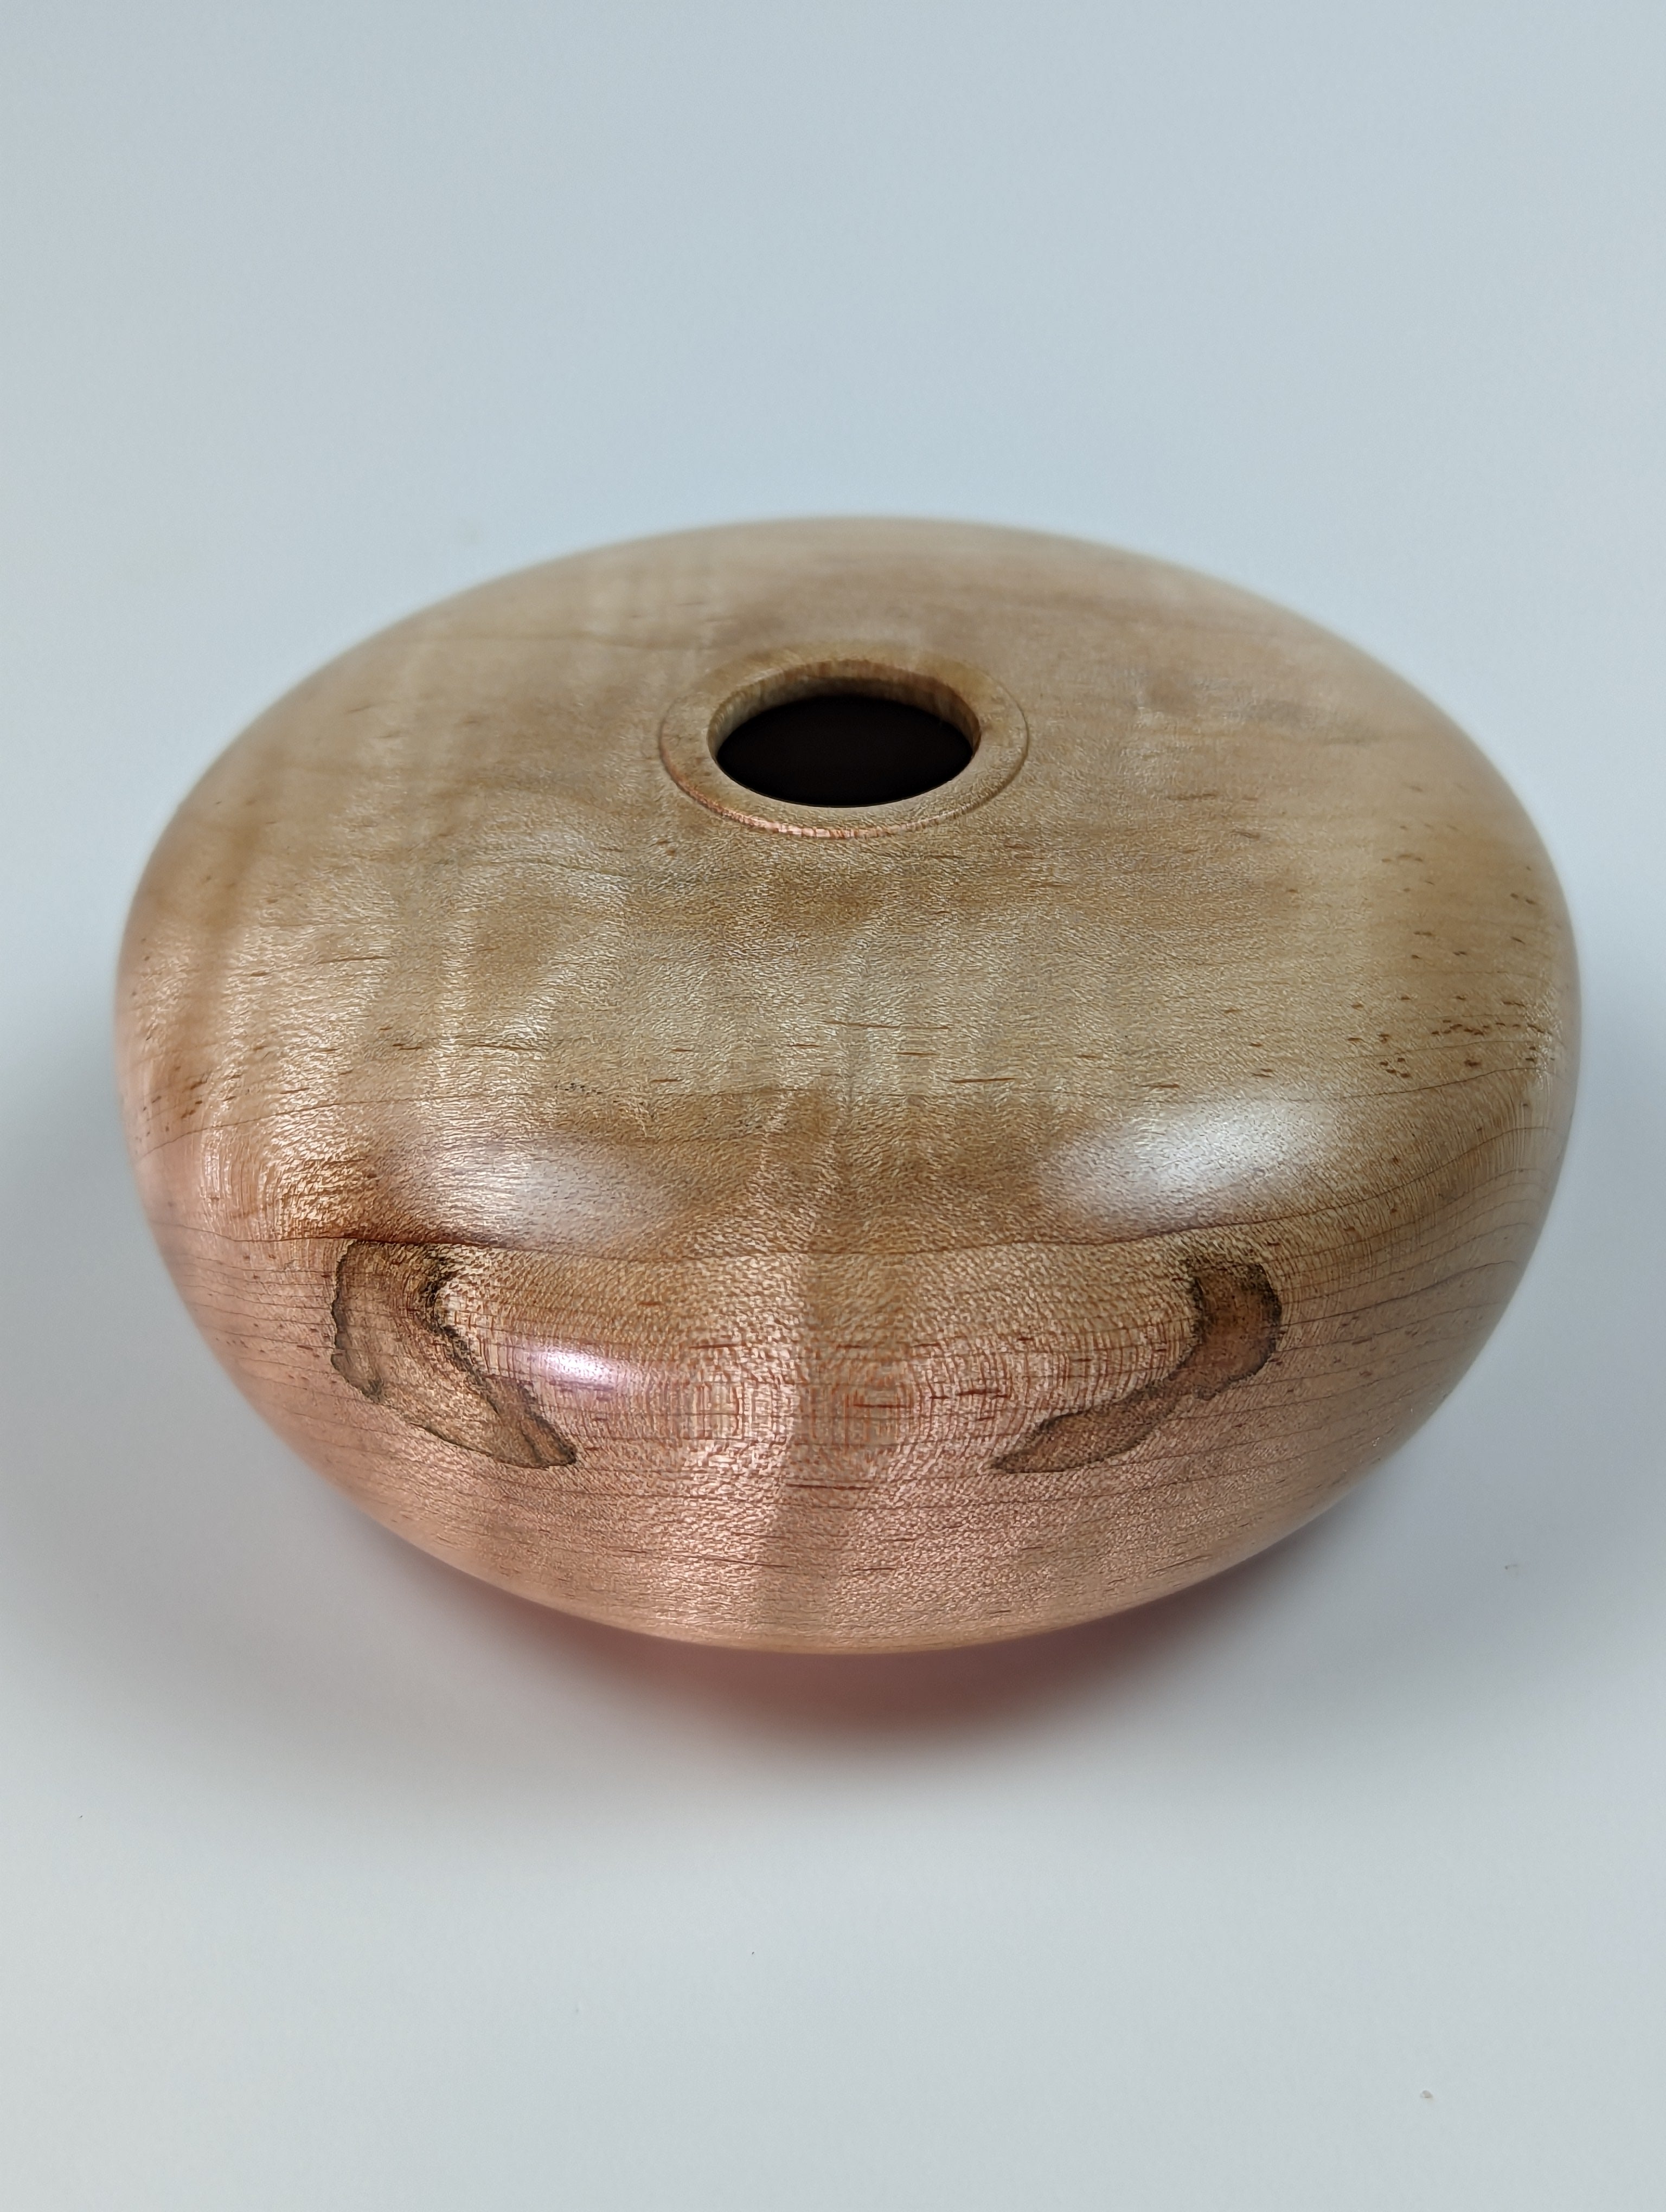 Little maple hollow form